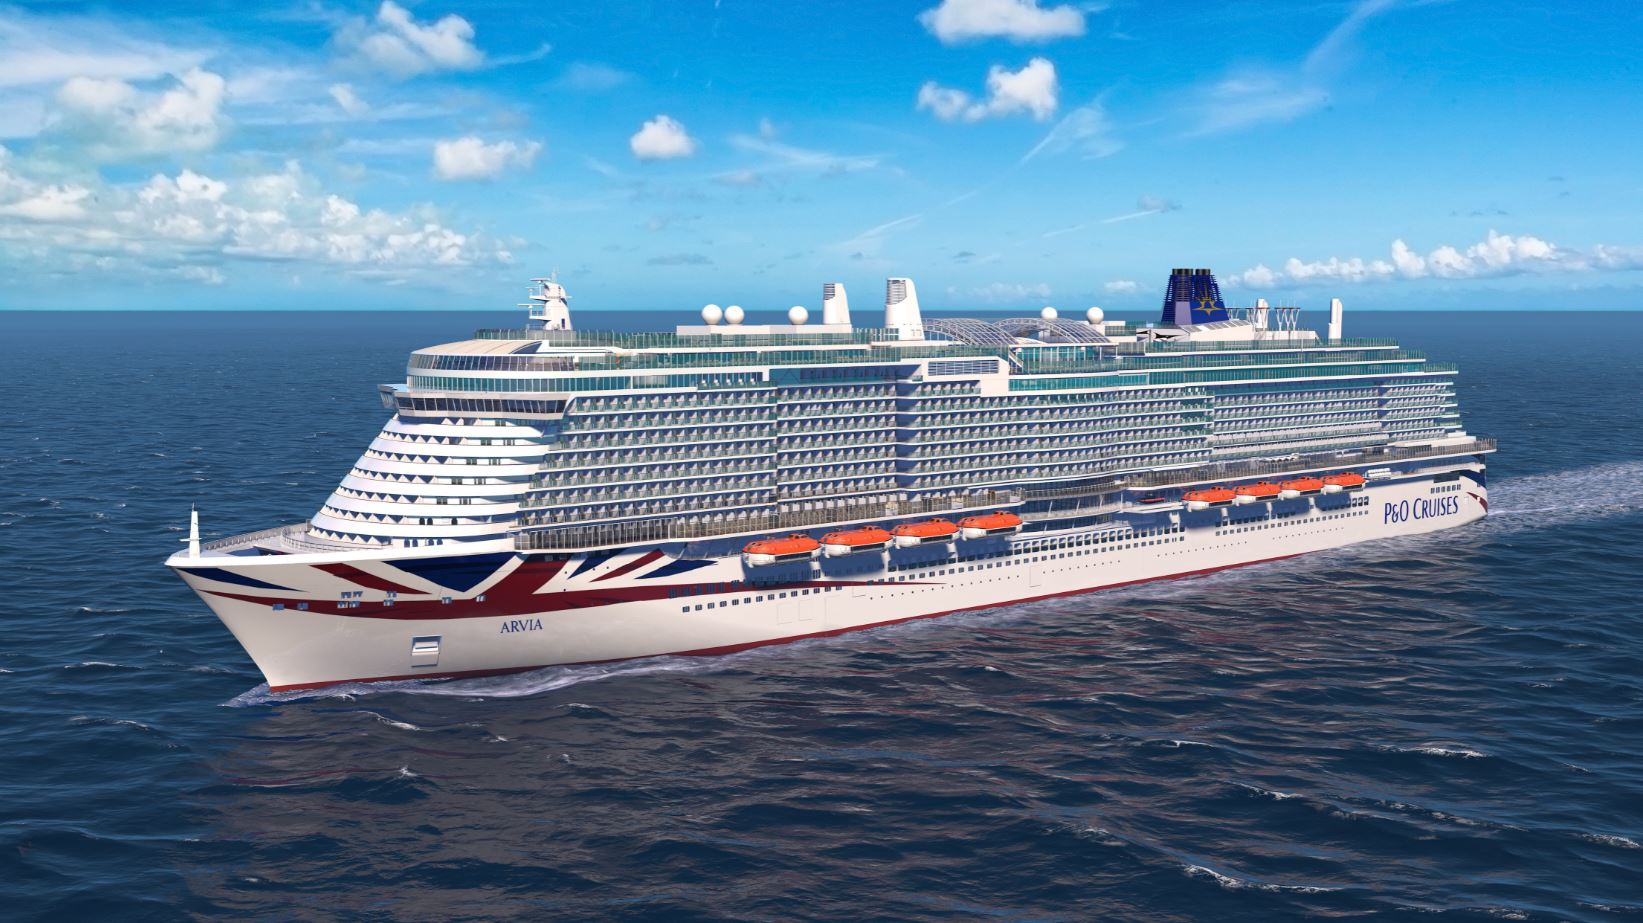 P&O Cruises Arvia to offer Caribbean maiden season CRUISE TO TRAVEL